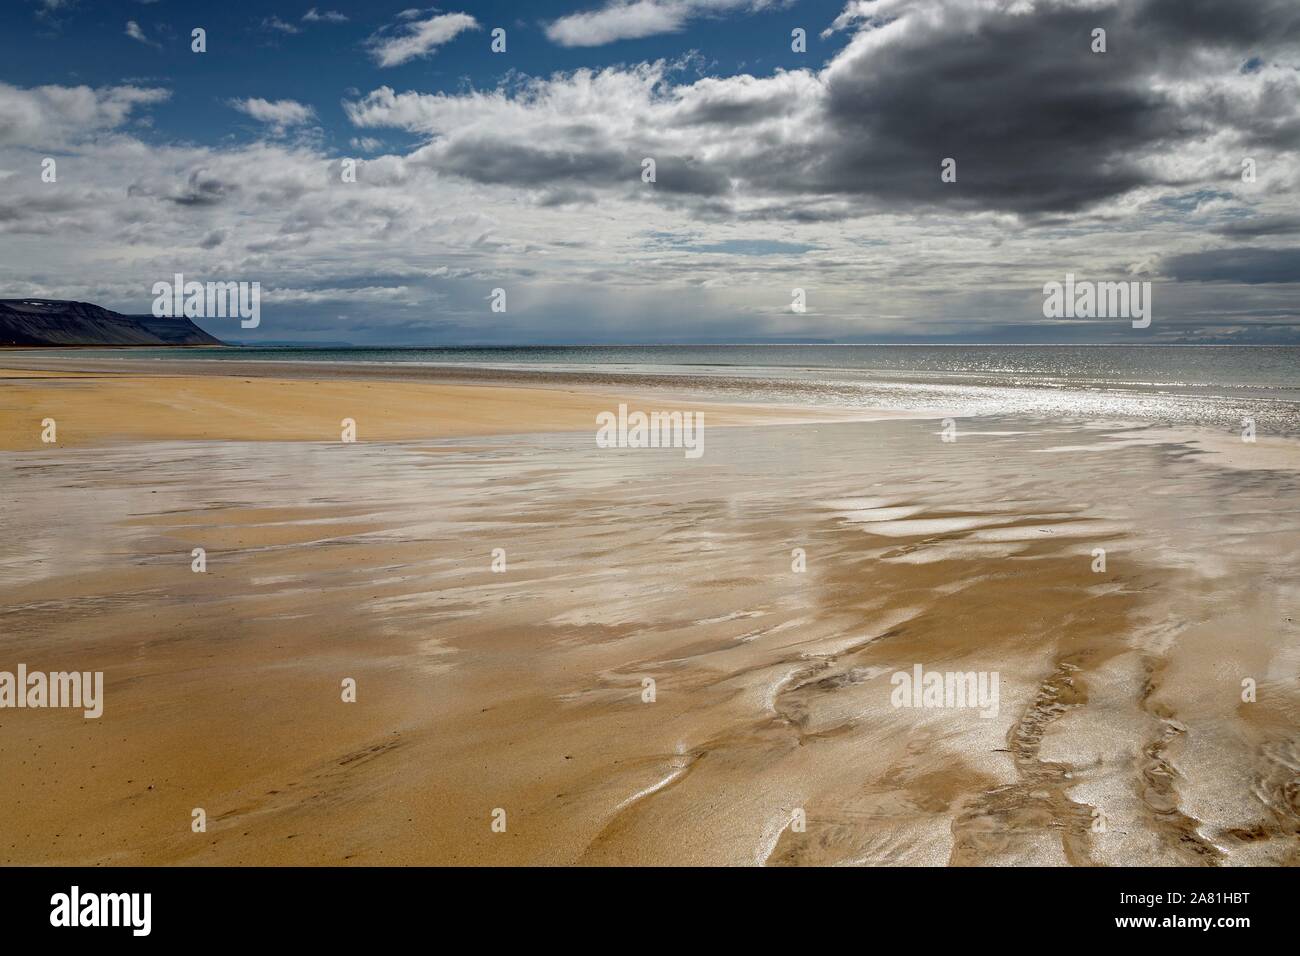 Heller Sandstrand mit Back Light, dramatische Wolken, Brekkuvellir, Westfjorde, Nordurland djupivogur, Island Stockfoto